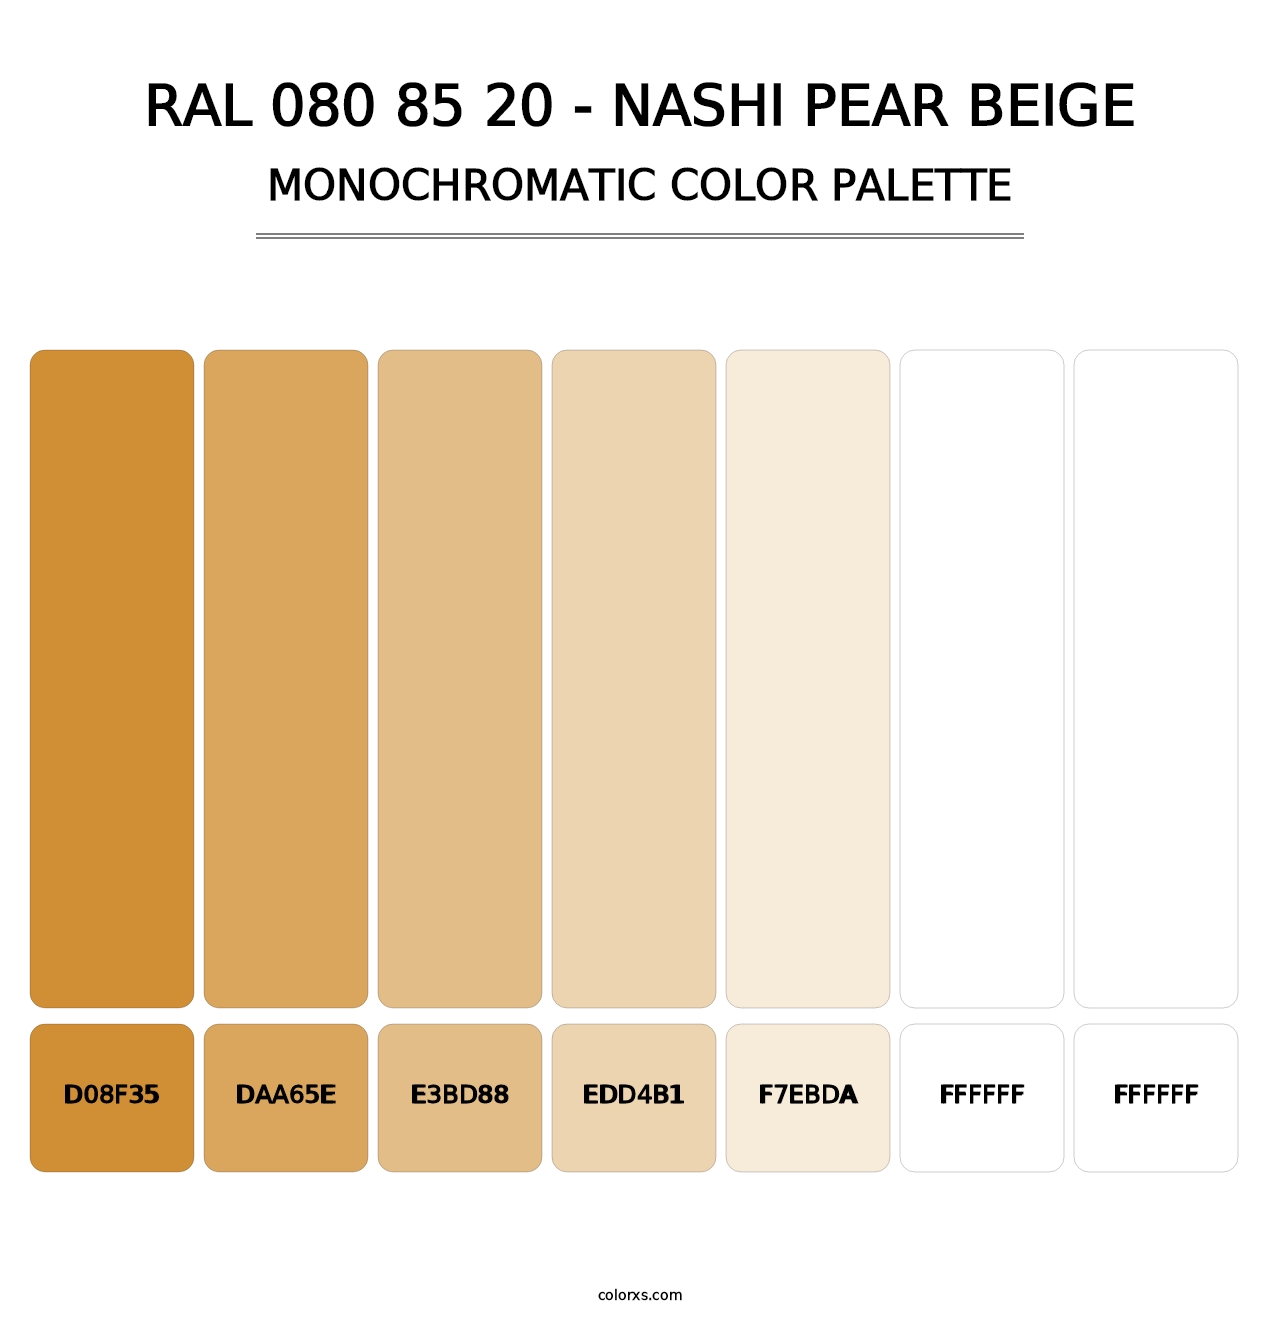 RAL 080 85 20 - Nashi Pear Beige - Monochromatic Color Palette